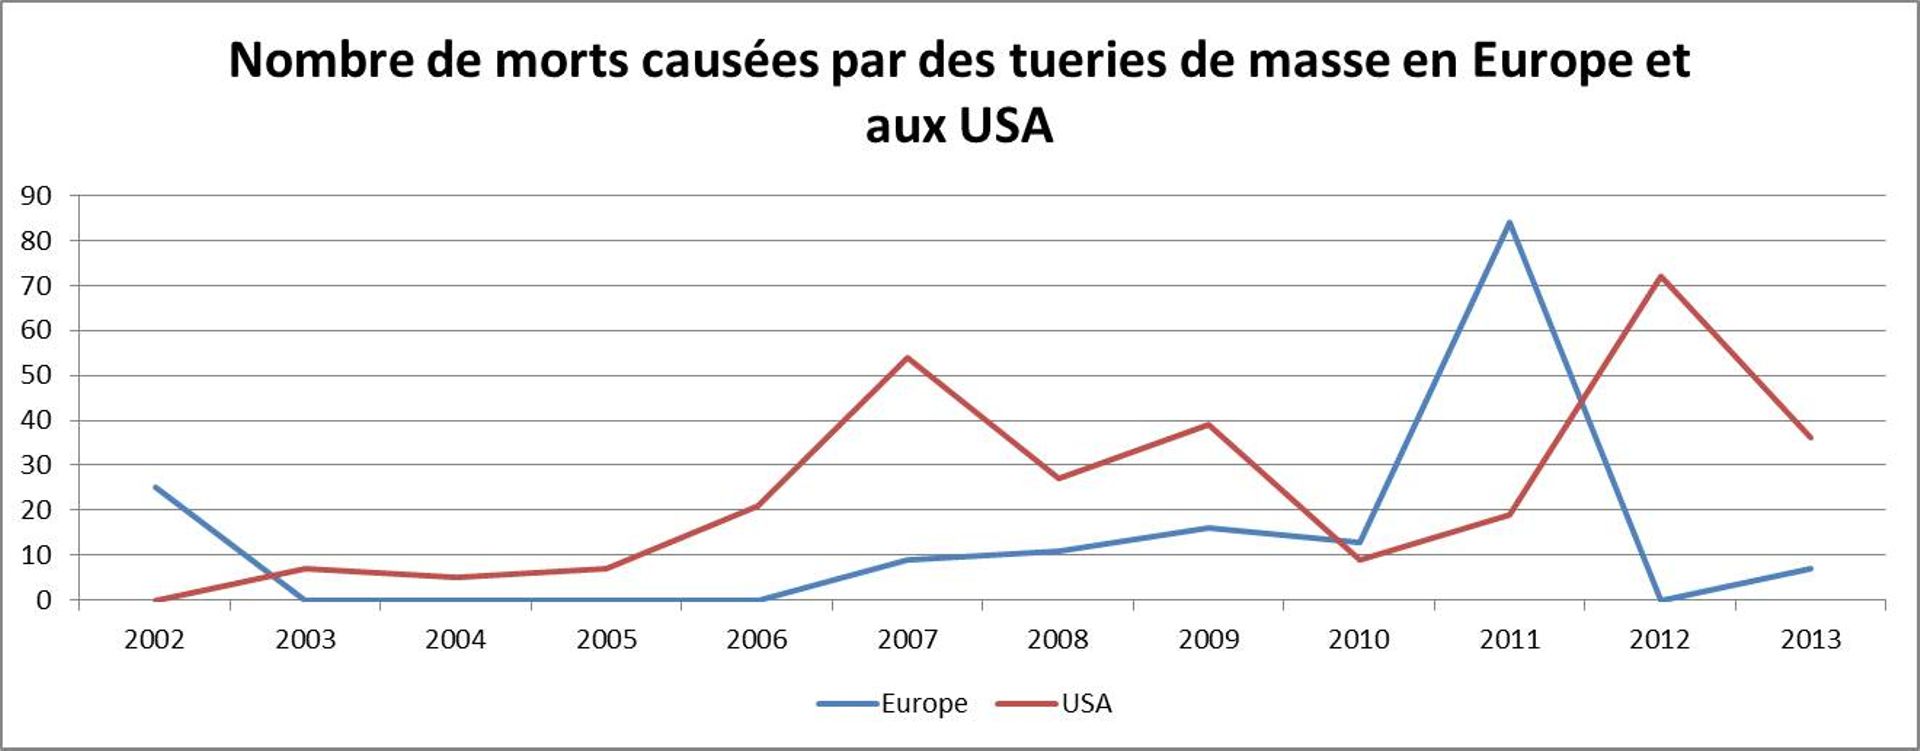 Les chiffres des tueries de masse (graphes)
(Source : http://www.telegraph.co.uk/news/worldnews/europe/belgium/8954366/Liege-shooting-and-grenade-attack-previous-European-incidents-in-last-10-years.html et http://www.motherjones.com/politics/2012/12/mass